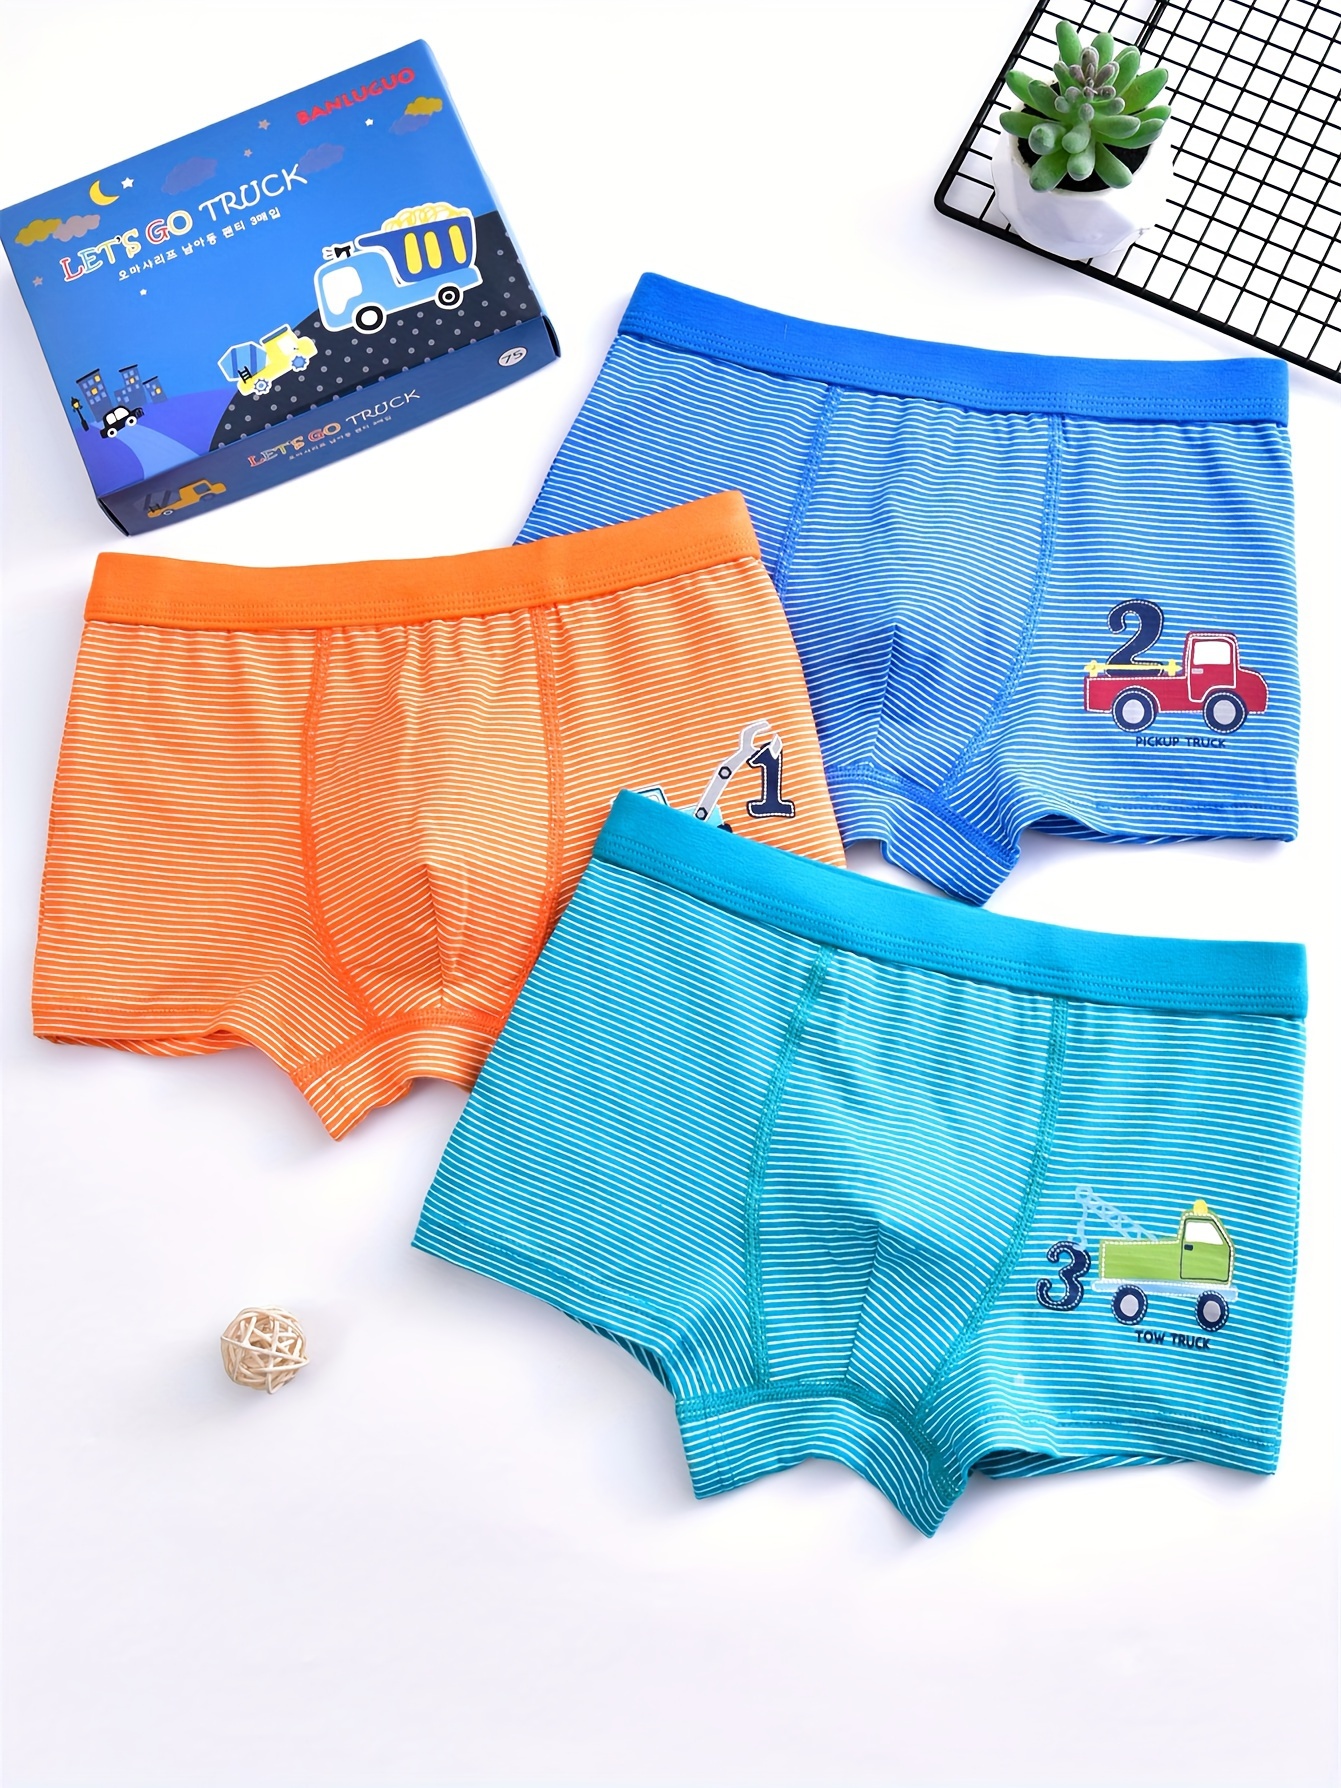 Boys' Toddler Underpants Boy Briefs in 3pcs Cotton Little Boys Briefs Soft  Dinosaur Truck Toddler Underwear Toddler Girl Panties